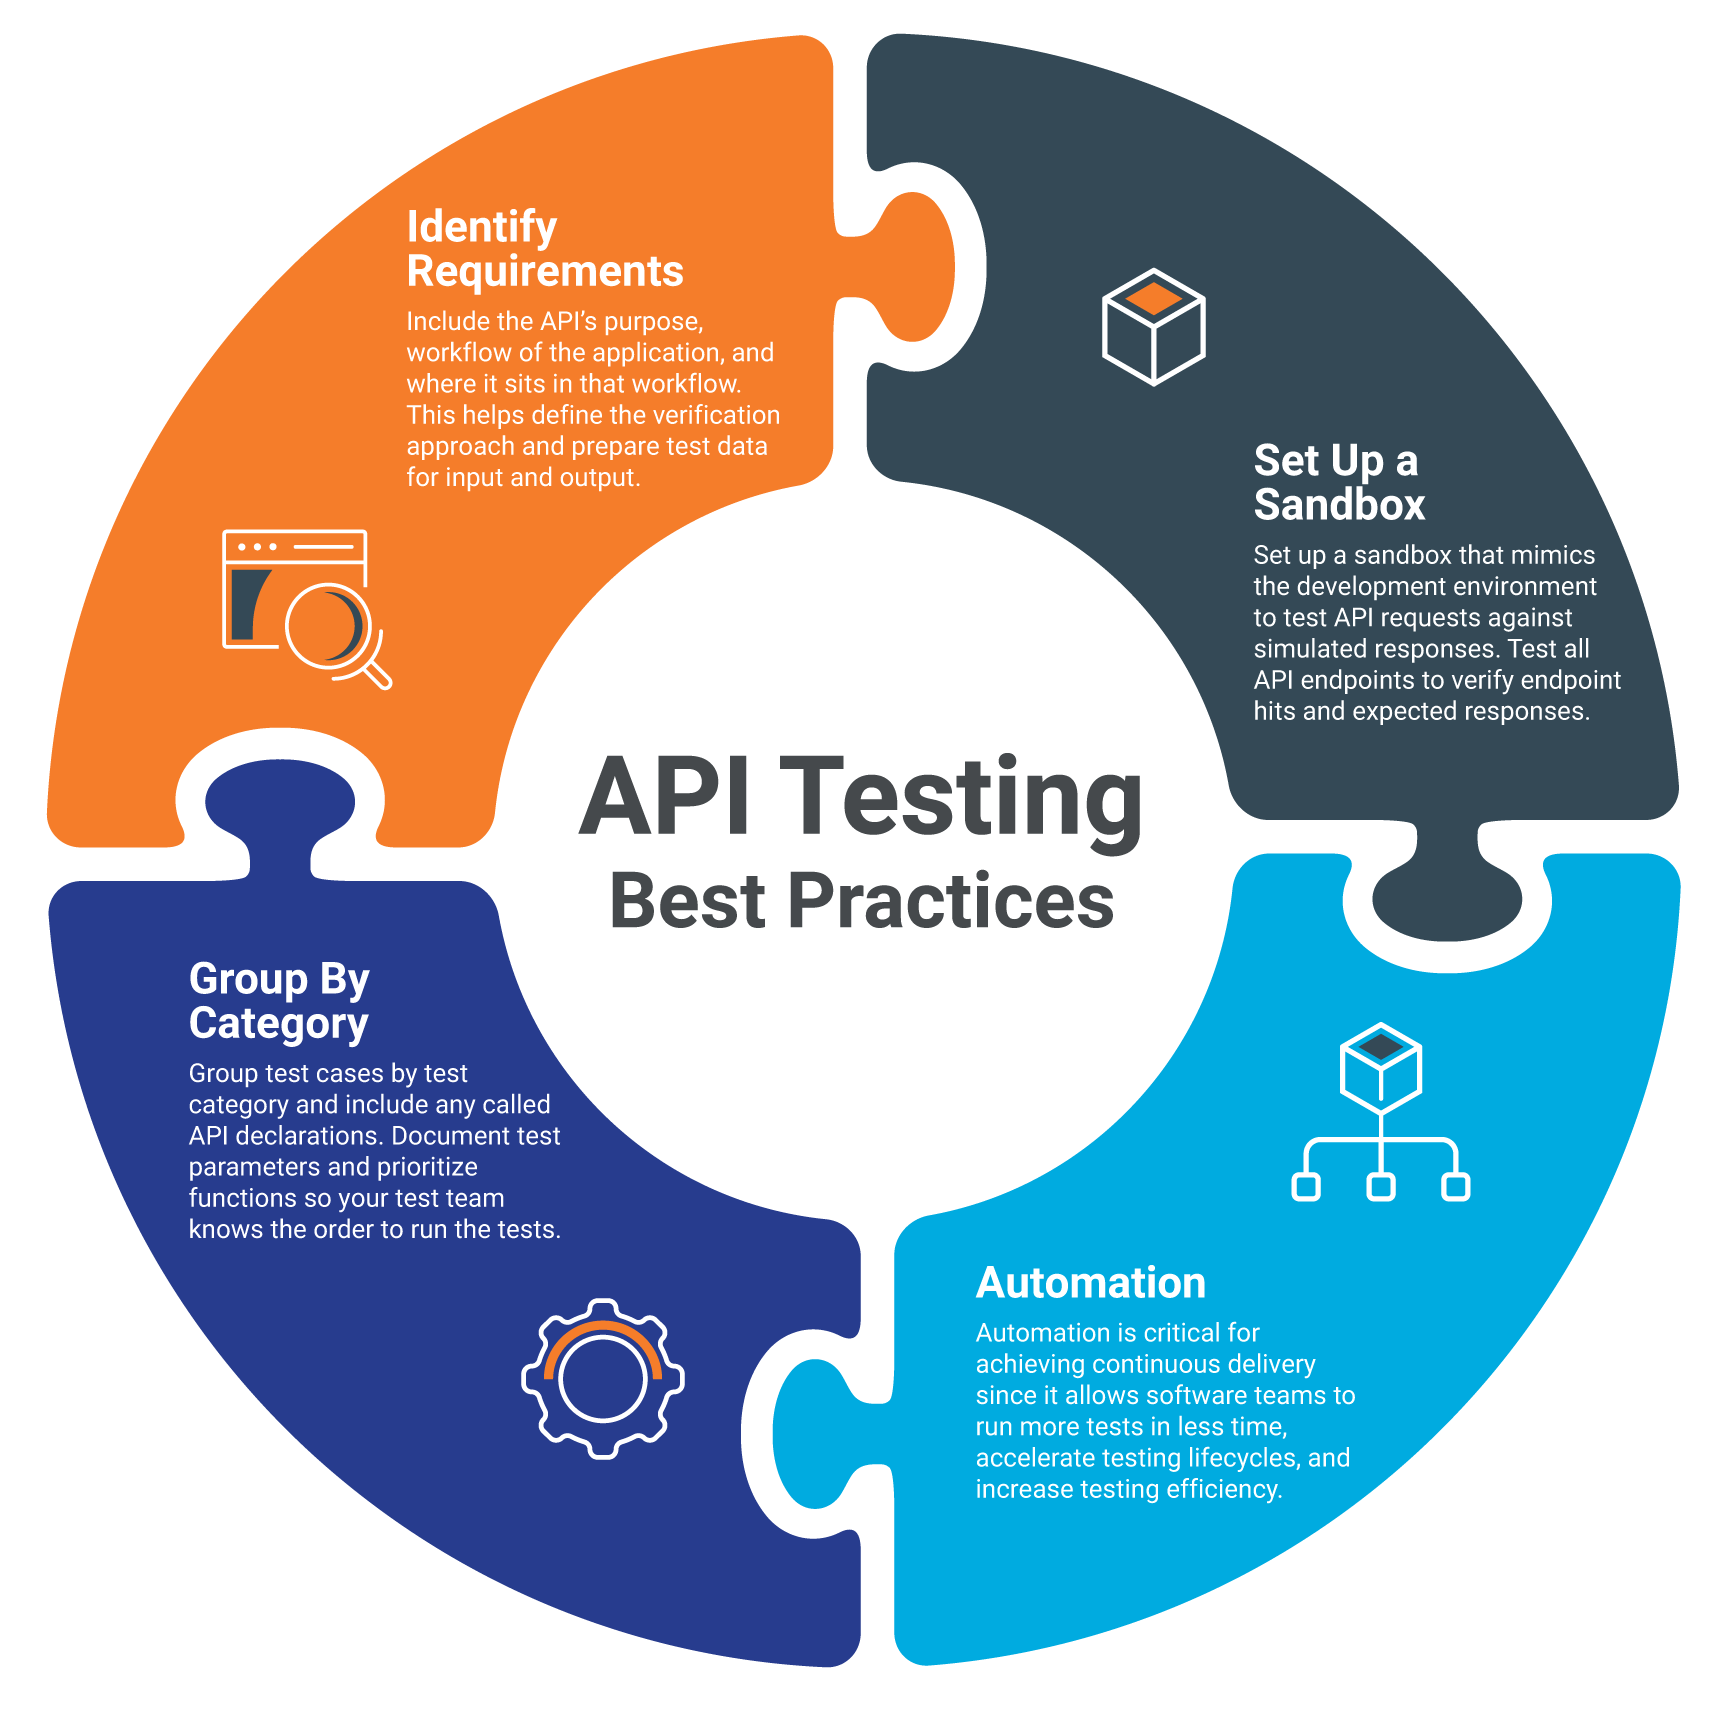 API Testing Best Practices Infographic